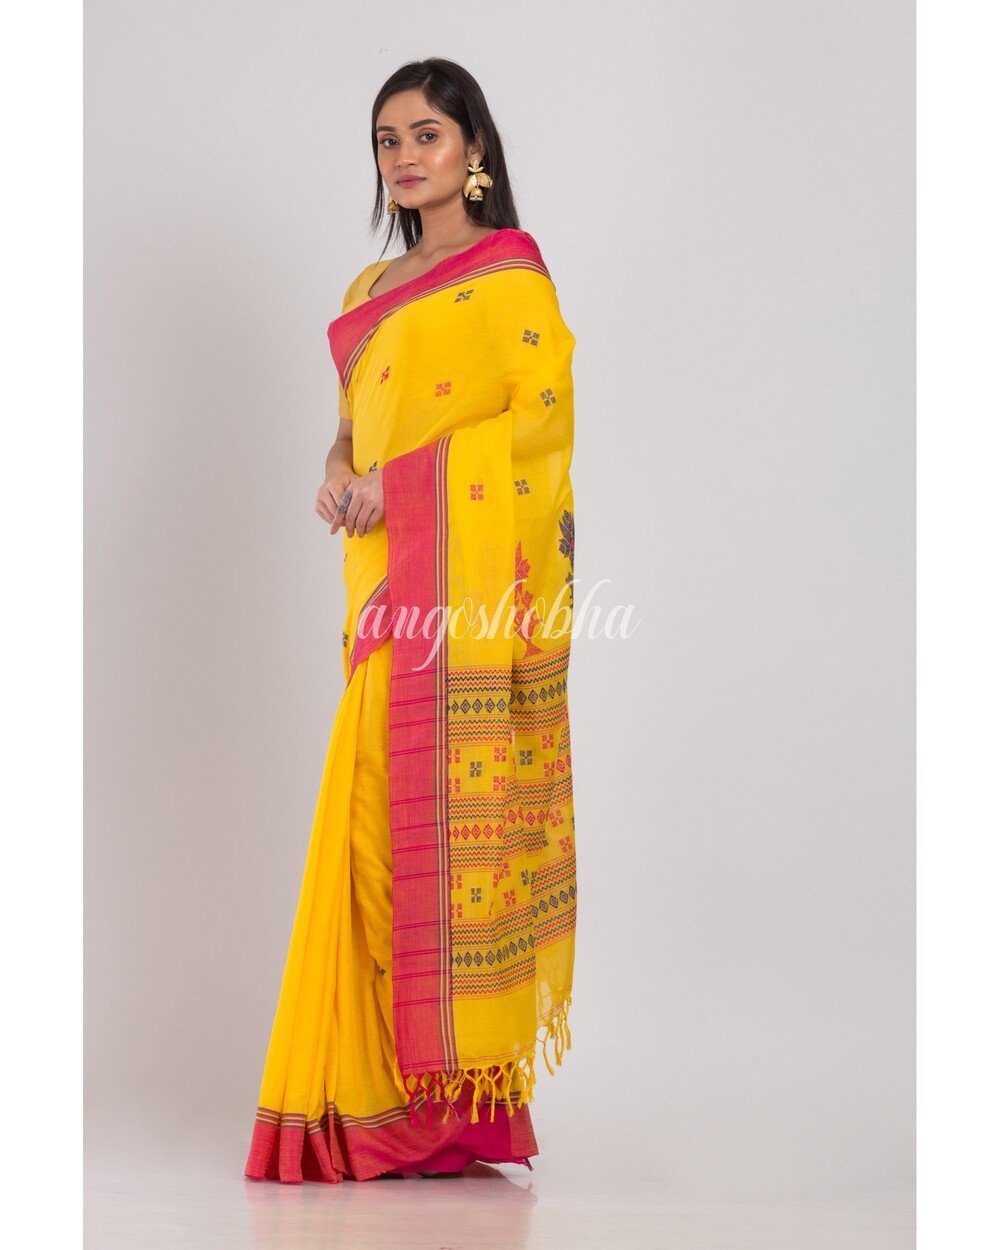 Women's Khadi Cotton Yellow Handloom Saree - Angoshobha